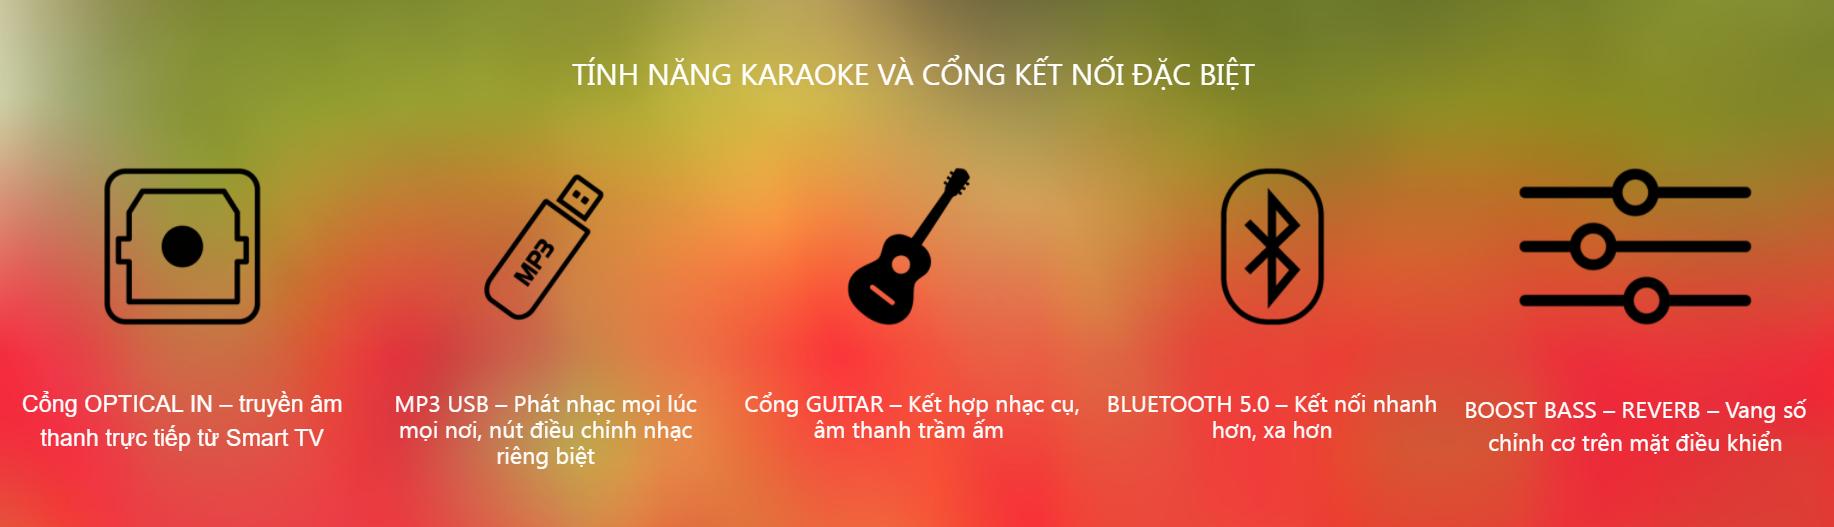 Loa Karaoke di động ACNOS CS603GR